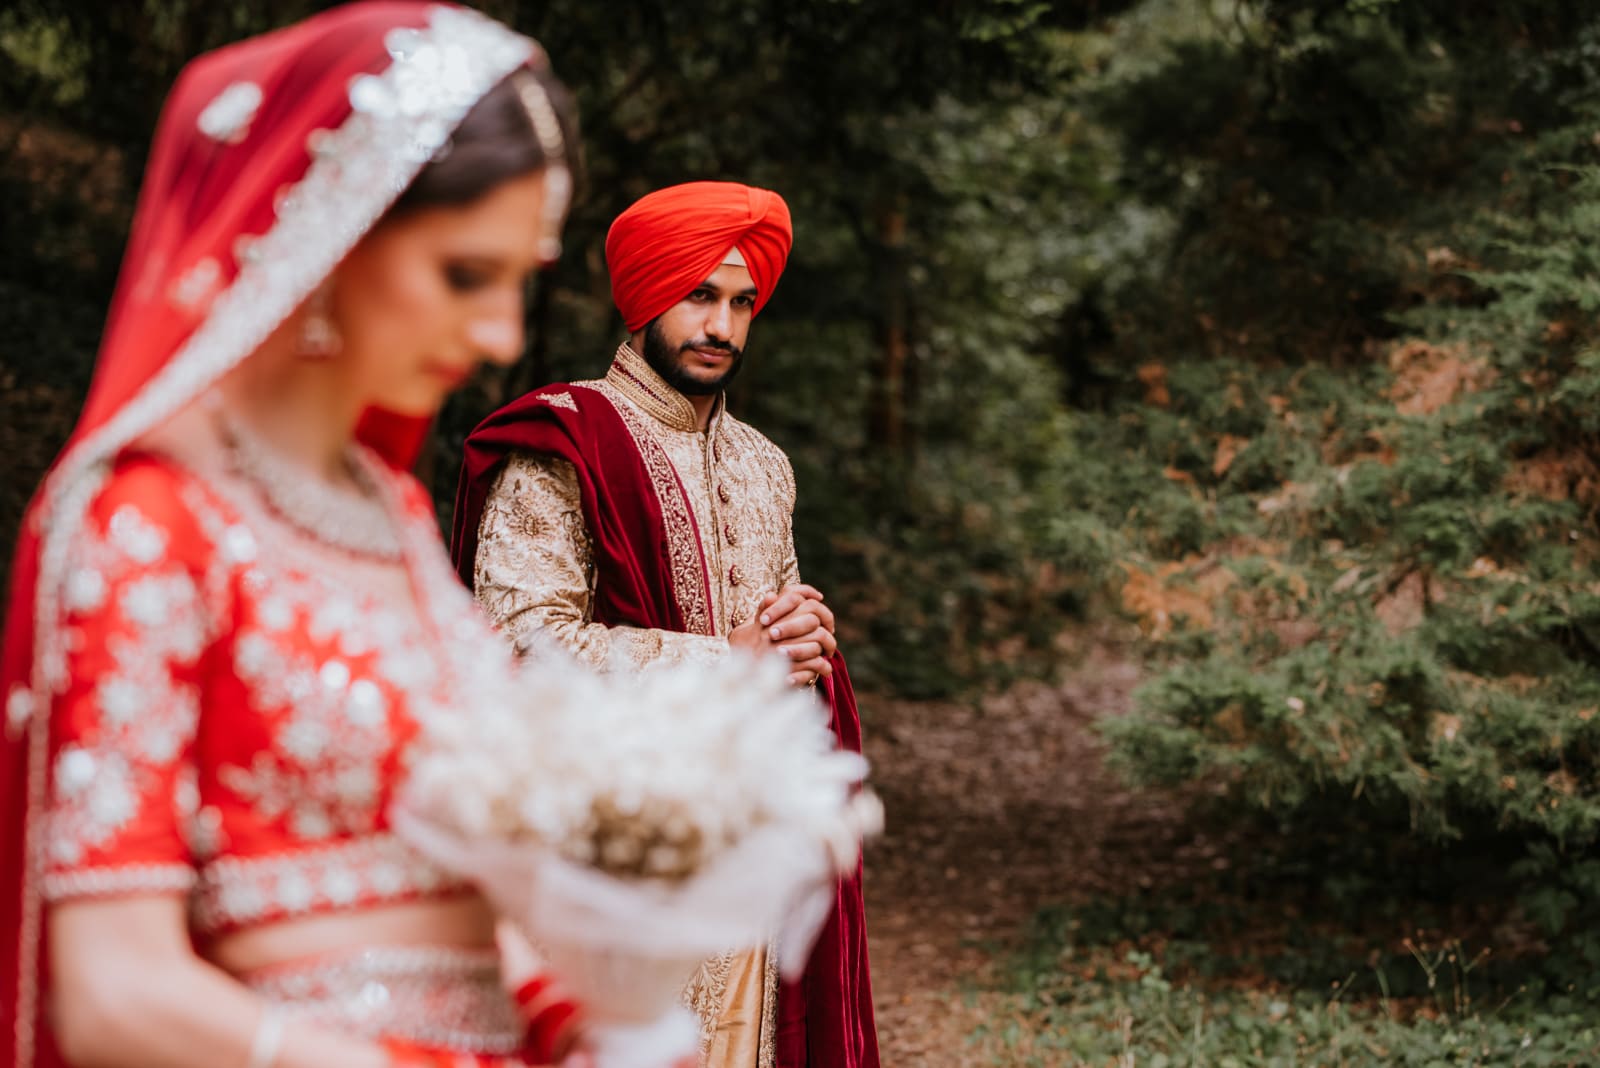 hounslow-sikh-gurdwara-fusion-wedding